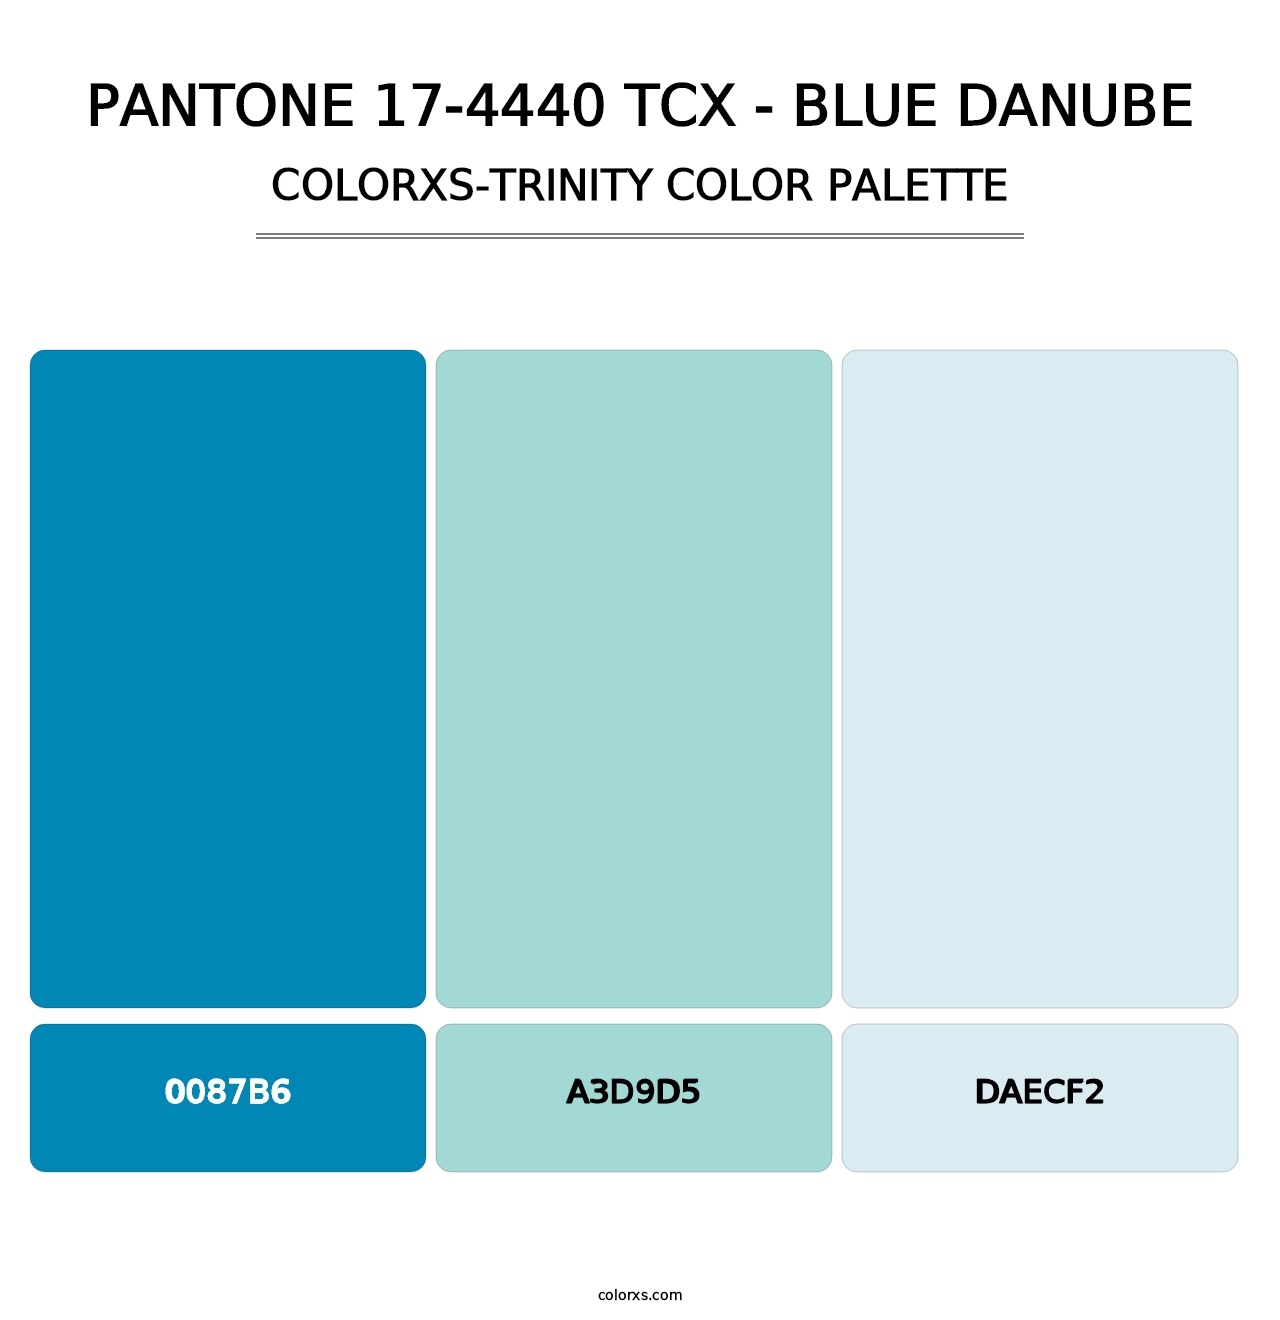 PANTONE 17-4440 TCX - Blue Danube - Colorxs Trinity Palette